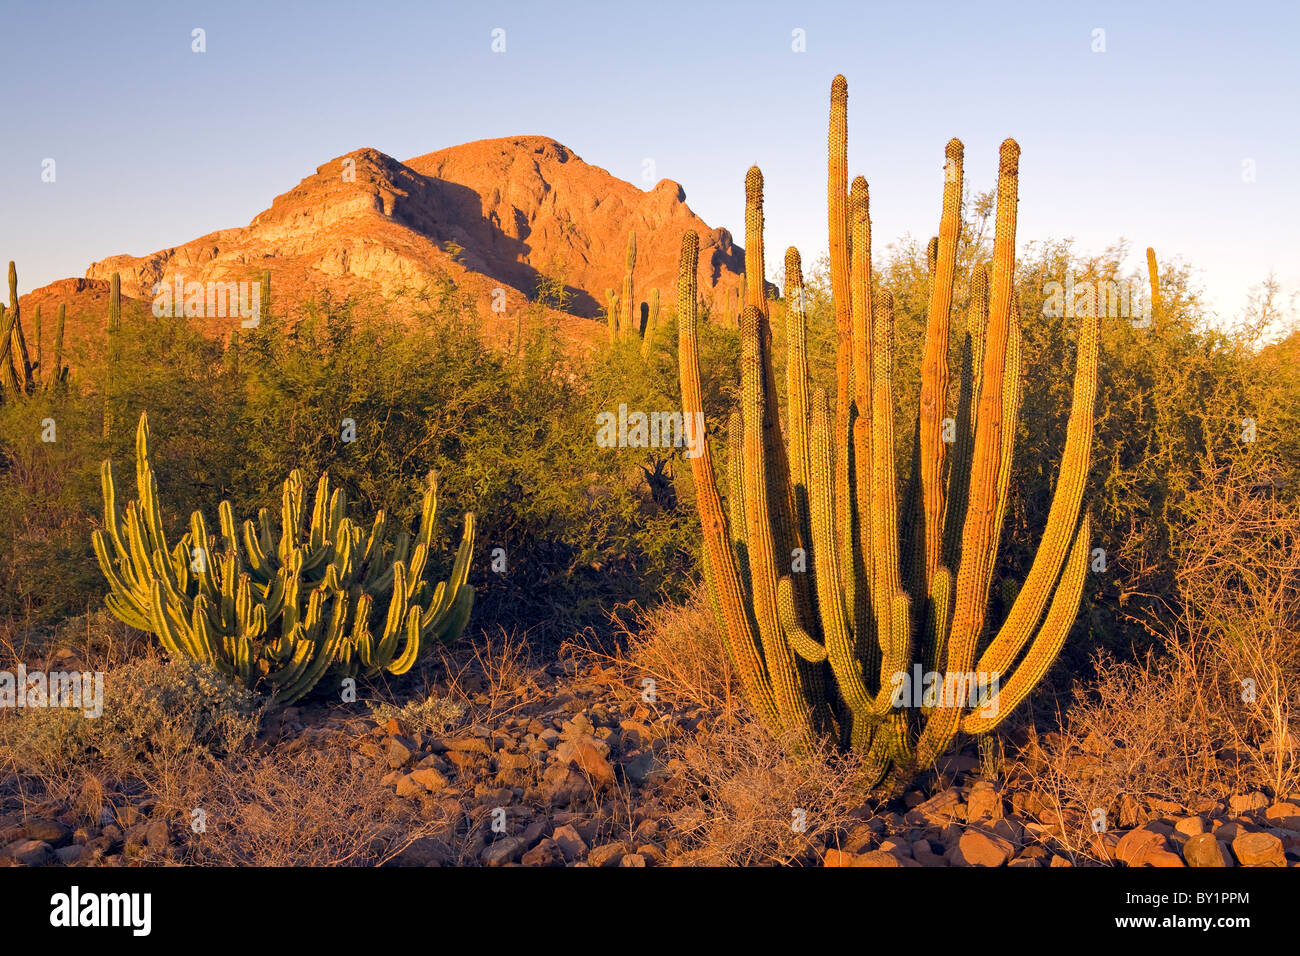 Organ Pipe Cactus (Stenocereus thurberi) and Candelabra Cactus (Myrtillocactus cochal) in the desert of Baja California, Mexico. Stock Photo